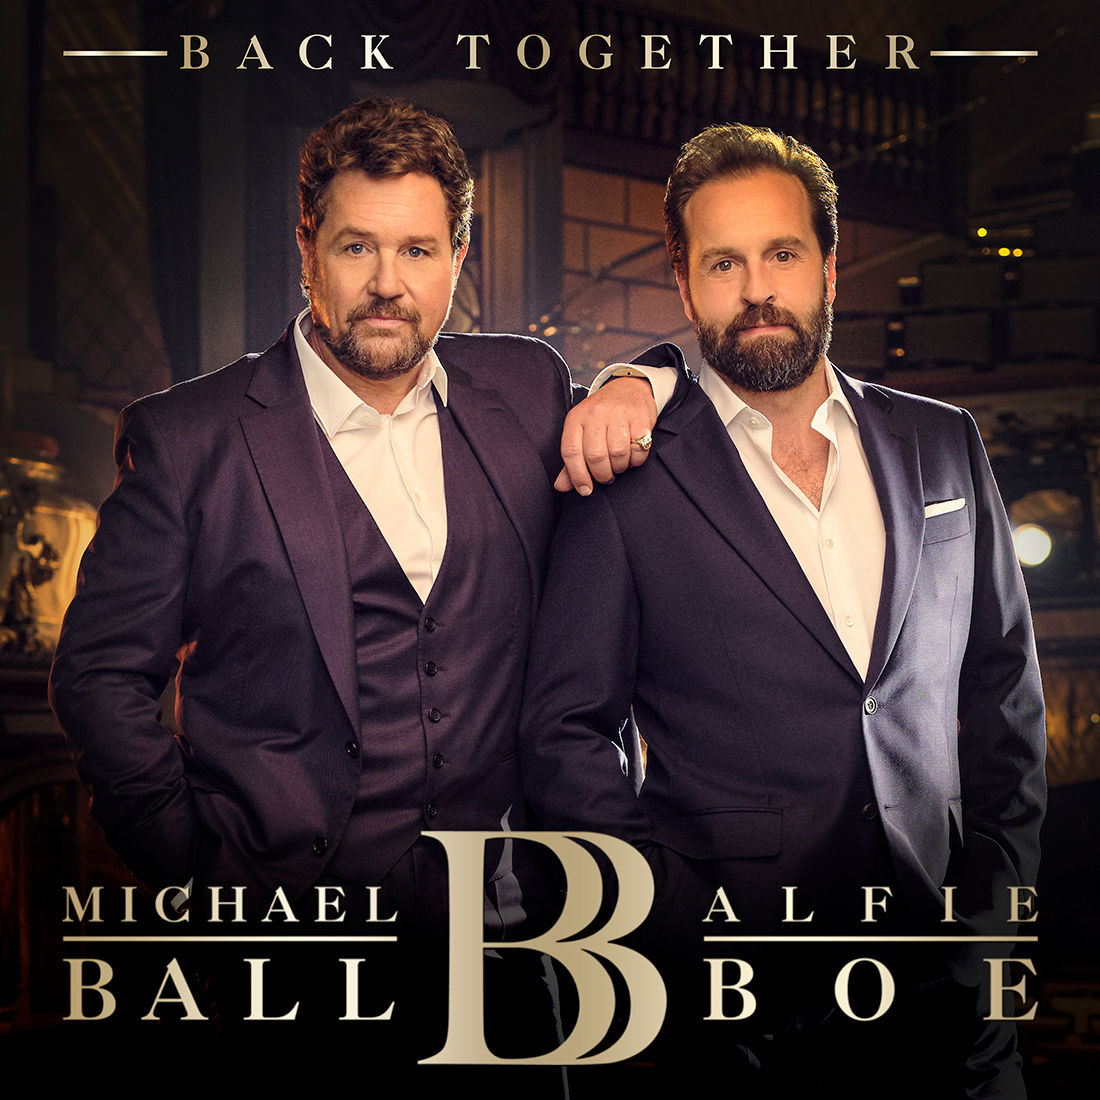 Michael Ball, Alfie Boe - Back Together CD